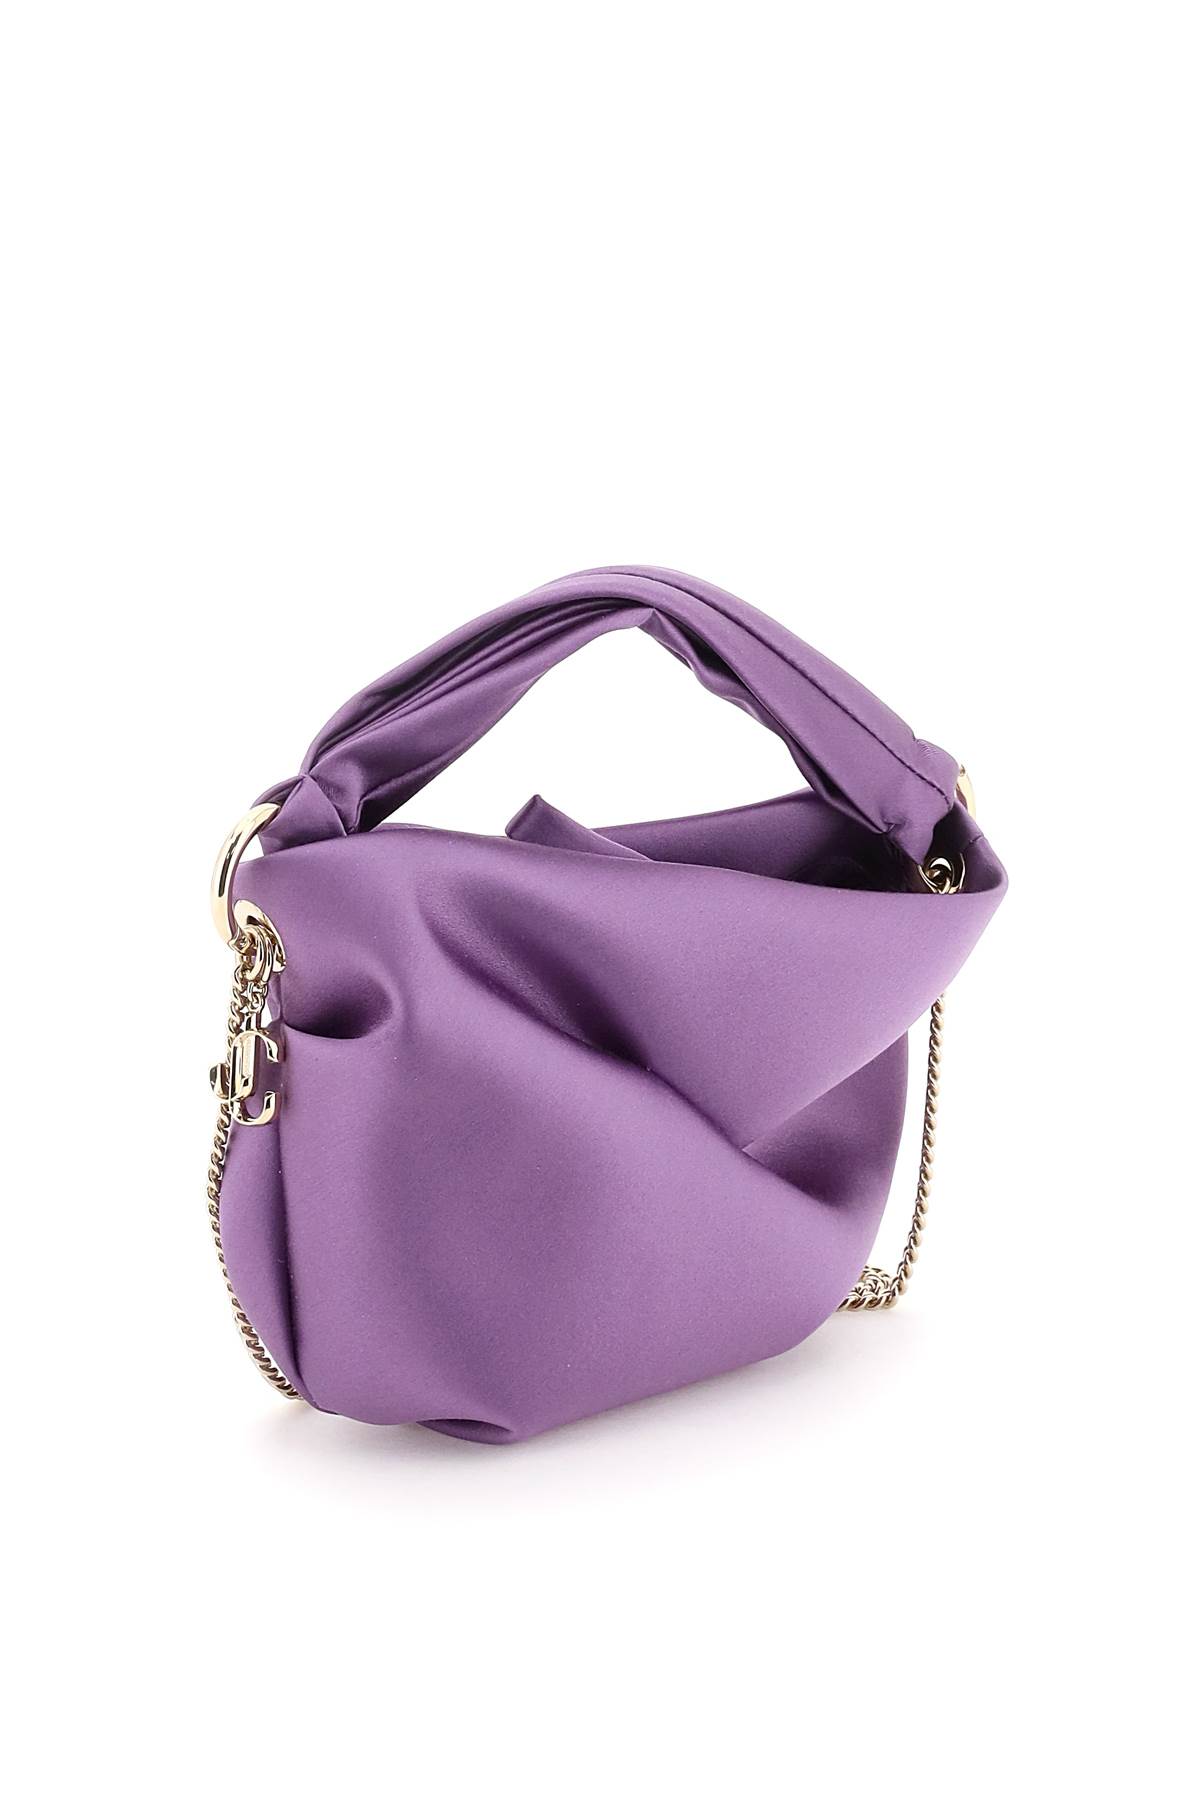 Jimmy Choo Bonny Mini Bag In Wisteria (purple) | ModeSens